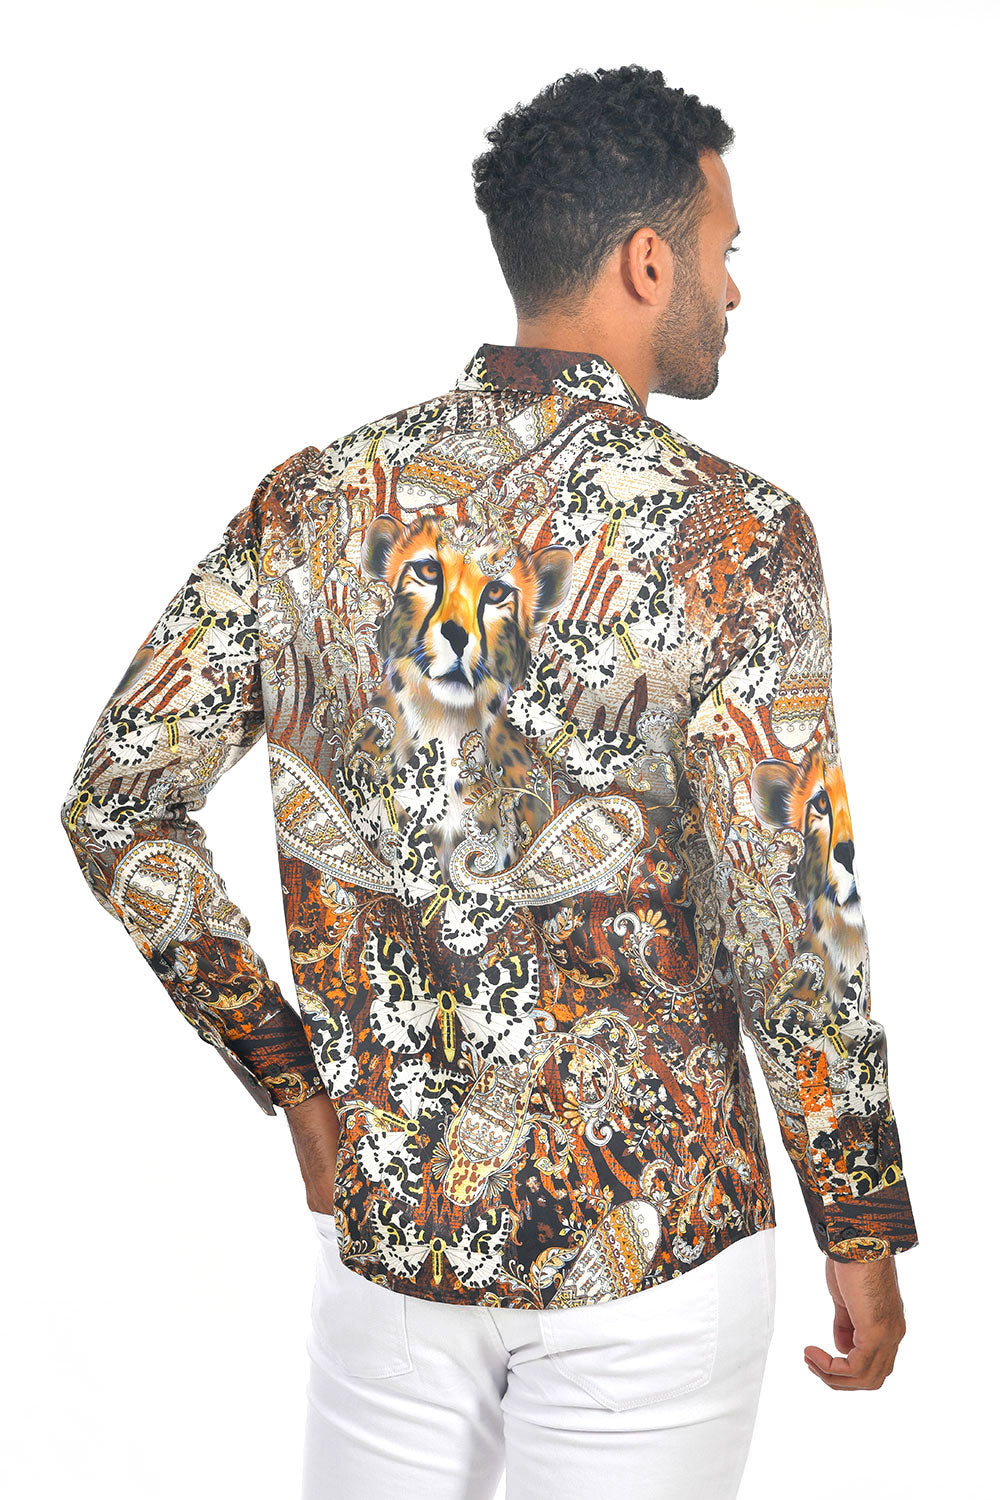 Barabas Men Multi Floral Tiger Butterfly Printed Dress Shirt SP213 S / Multi